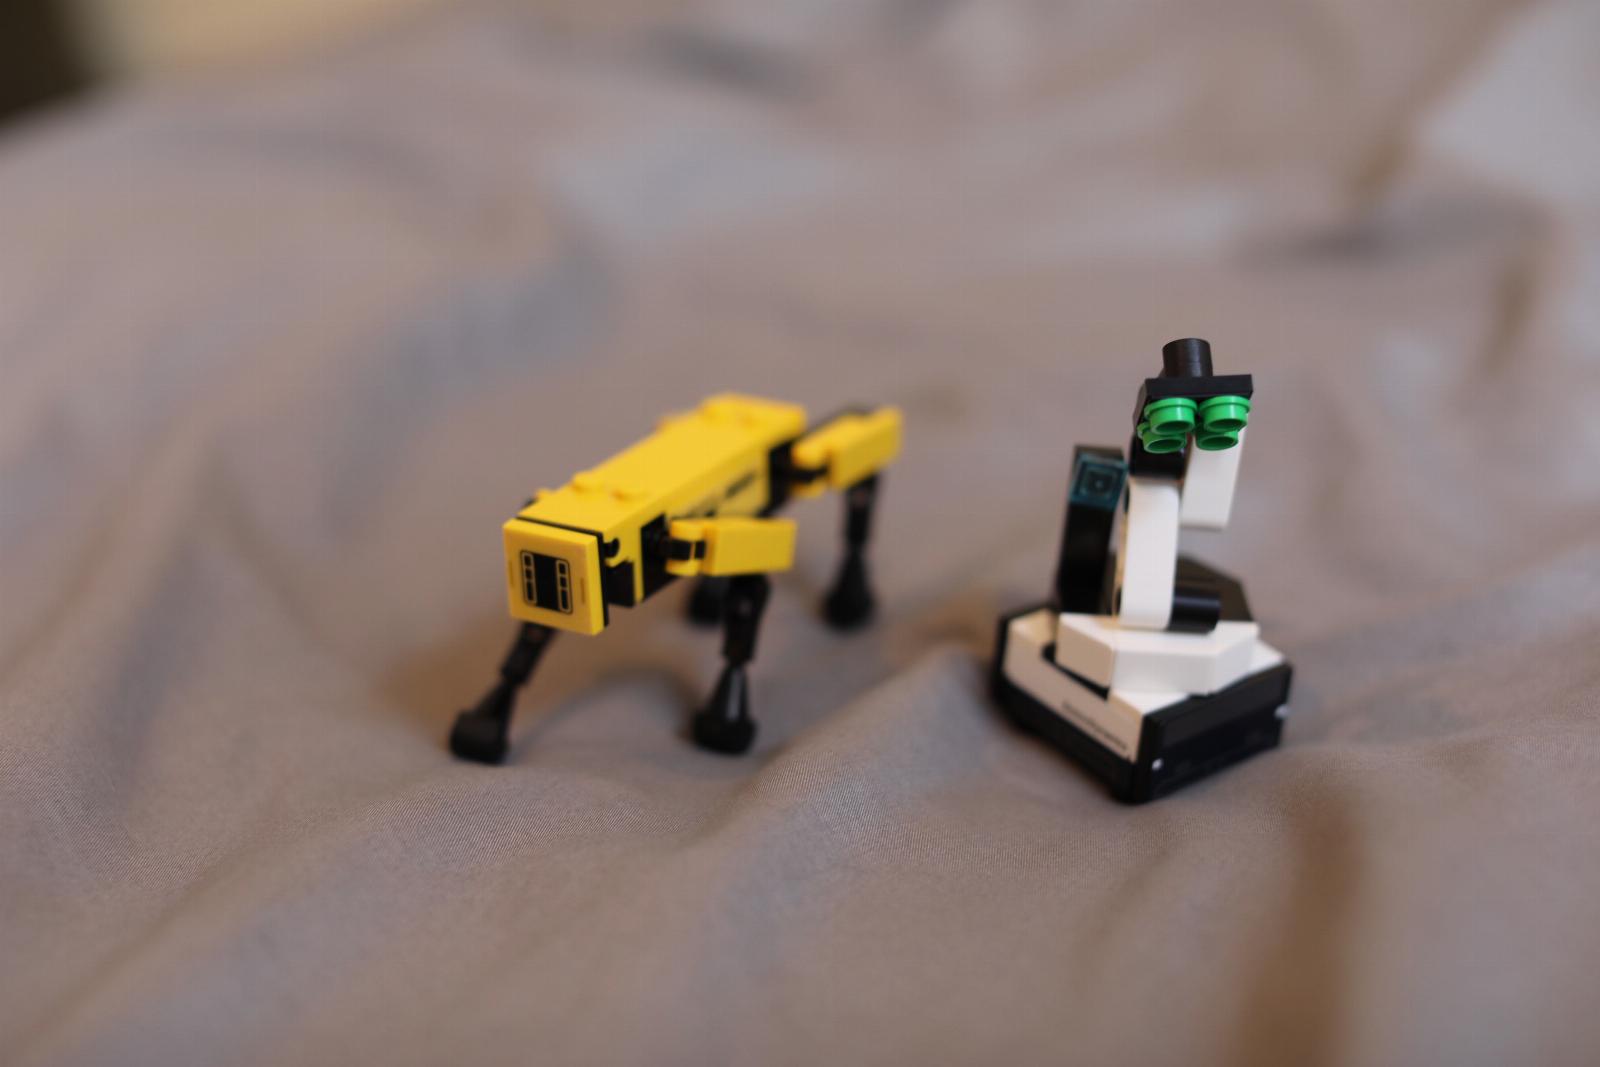 Check out these Boston Dynamics promo LEGO kits